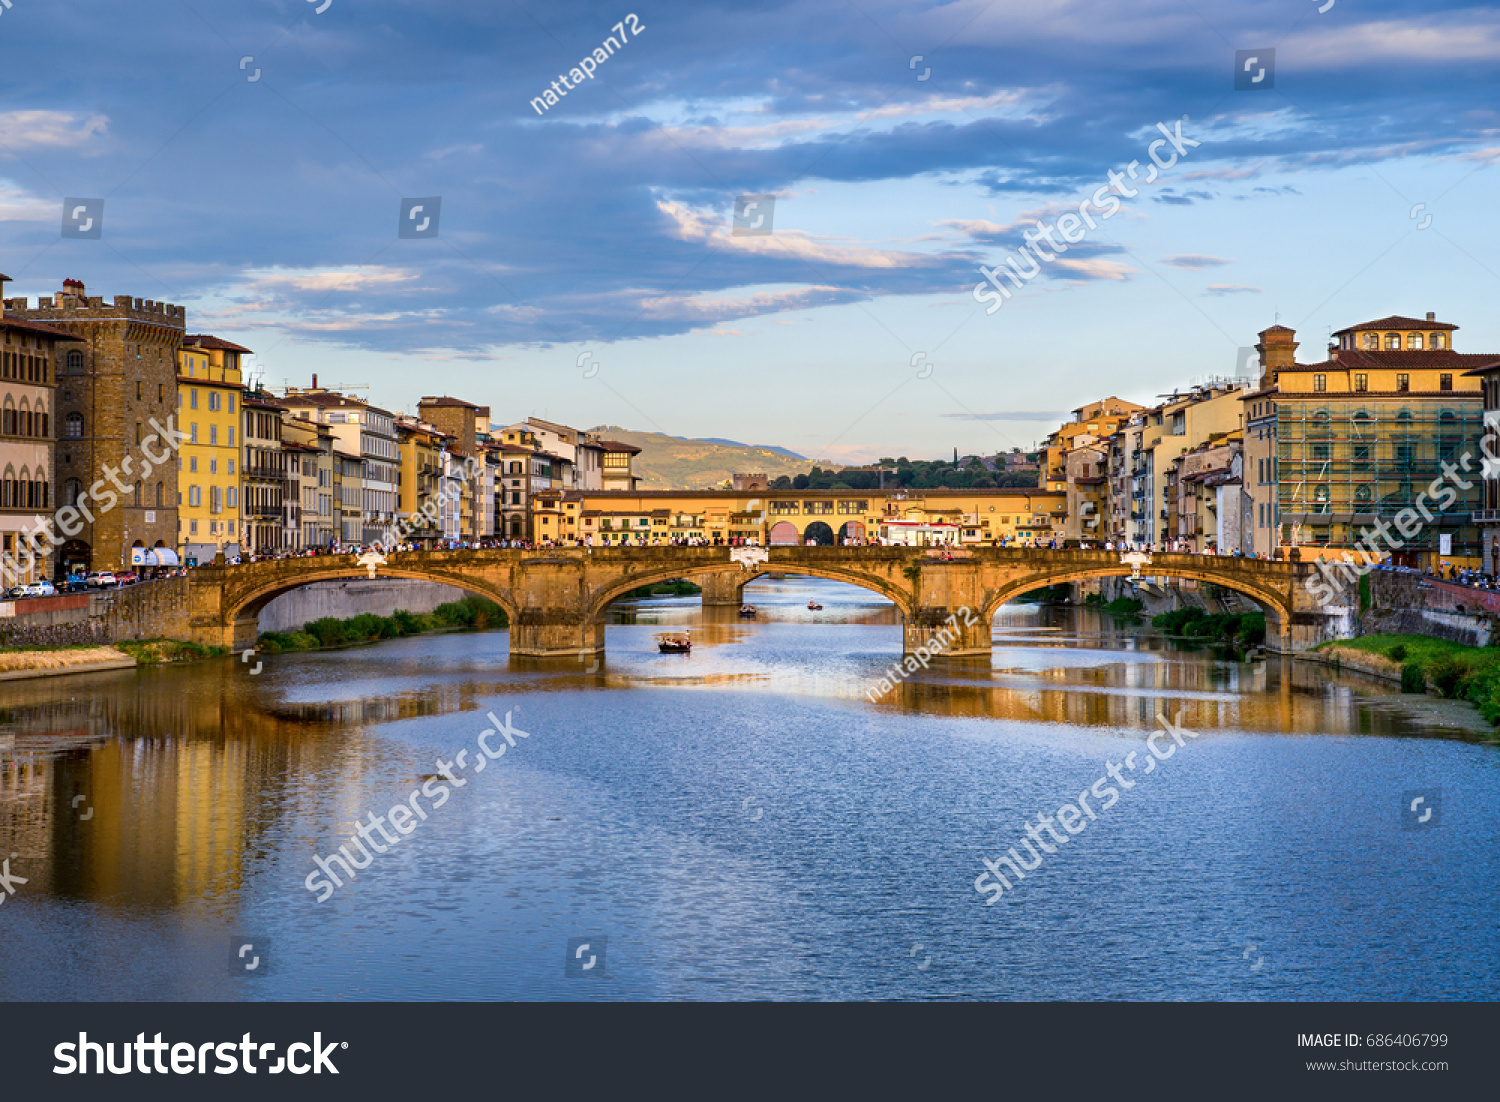 Florence cityscape view with Ponte Vecchio, a medieval stone bridge over Arno River. #686406799